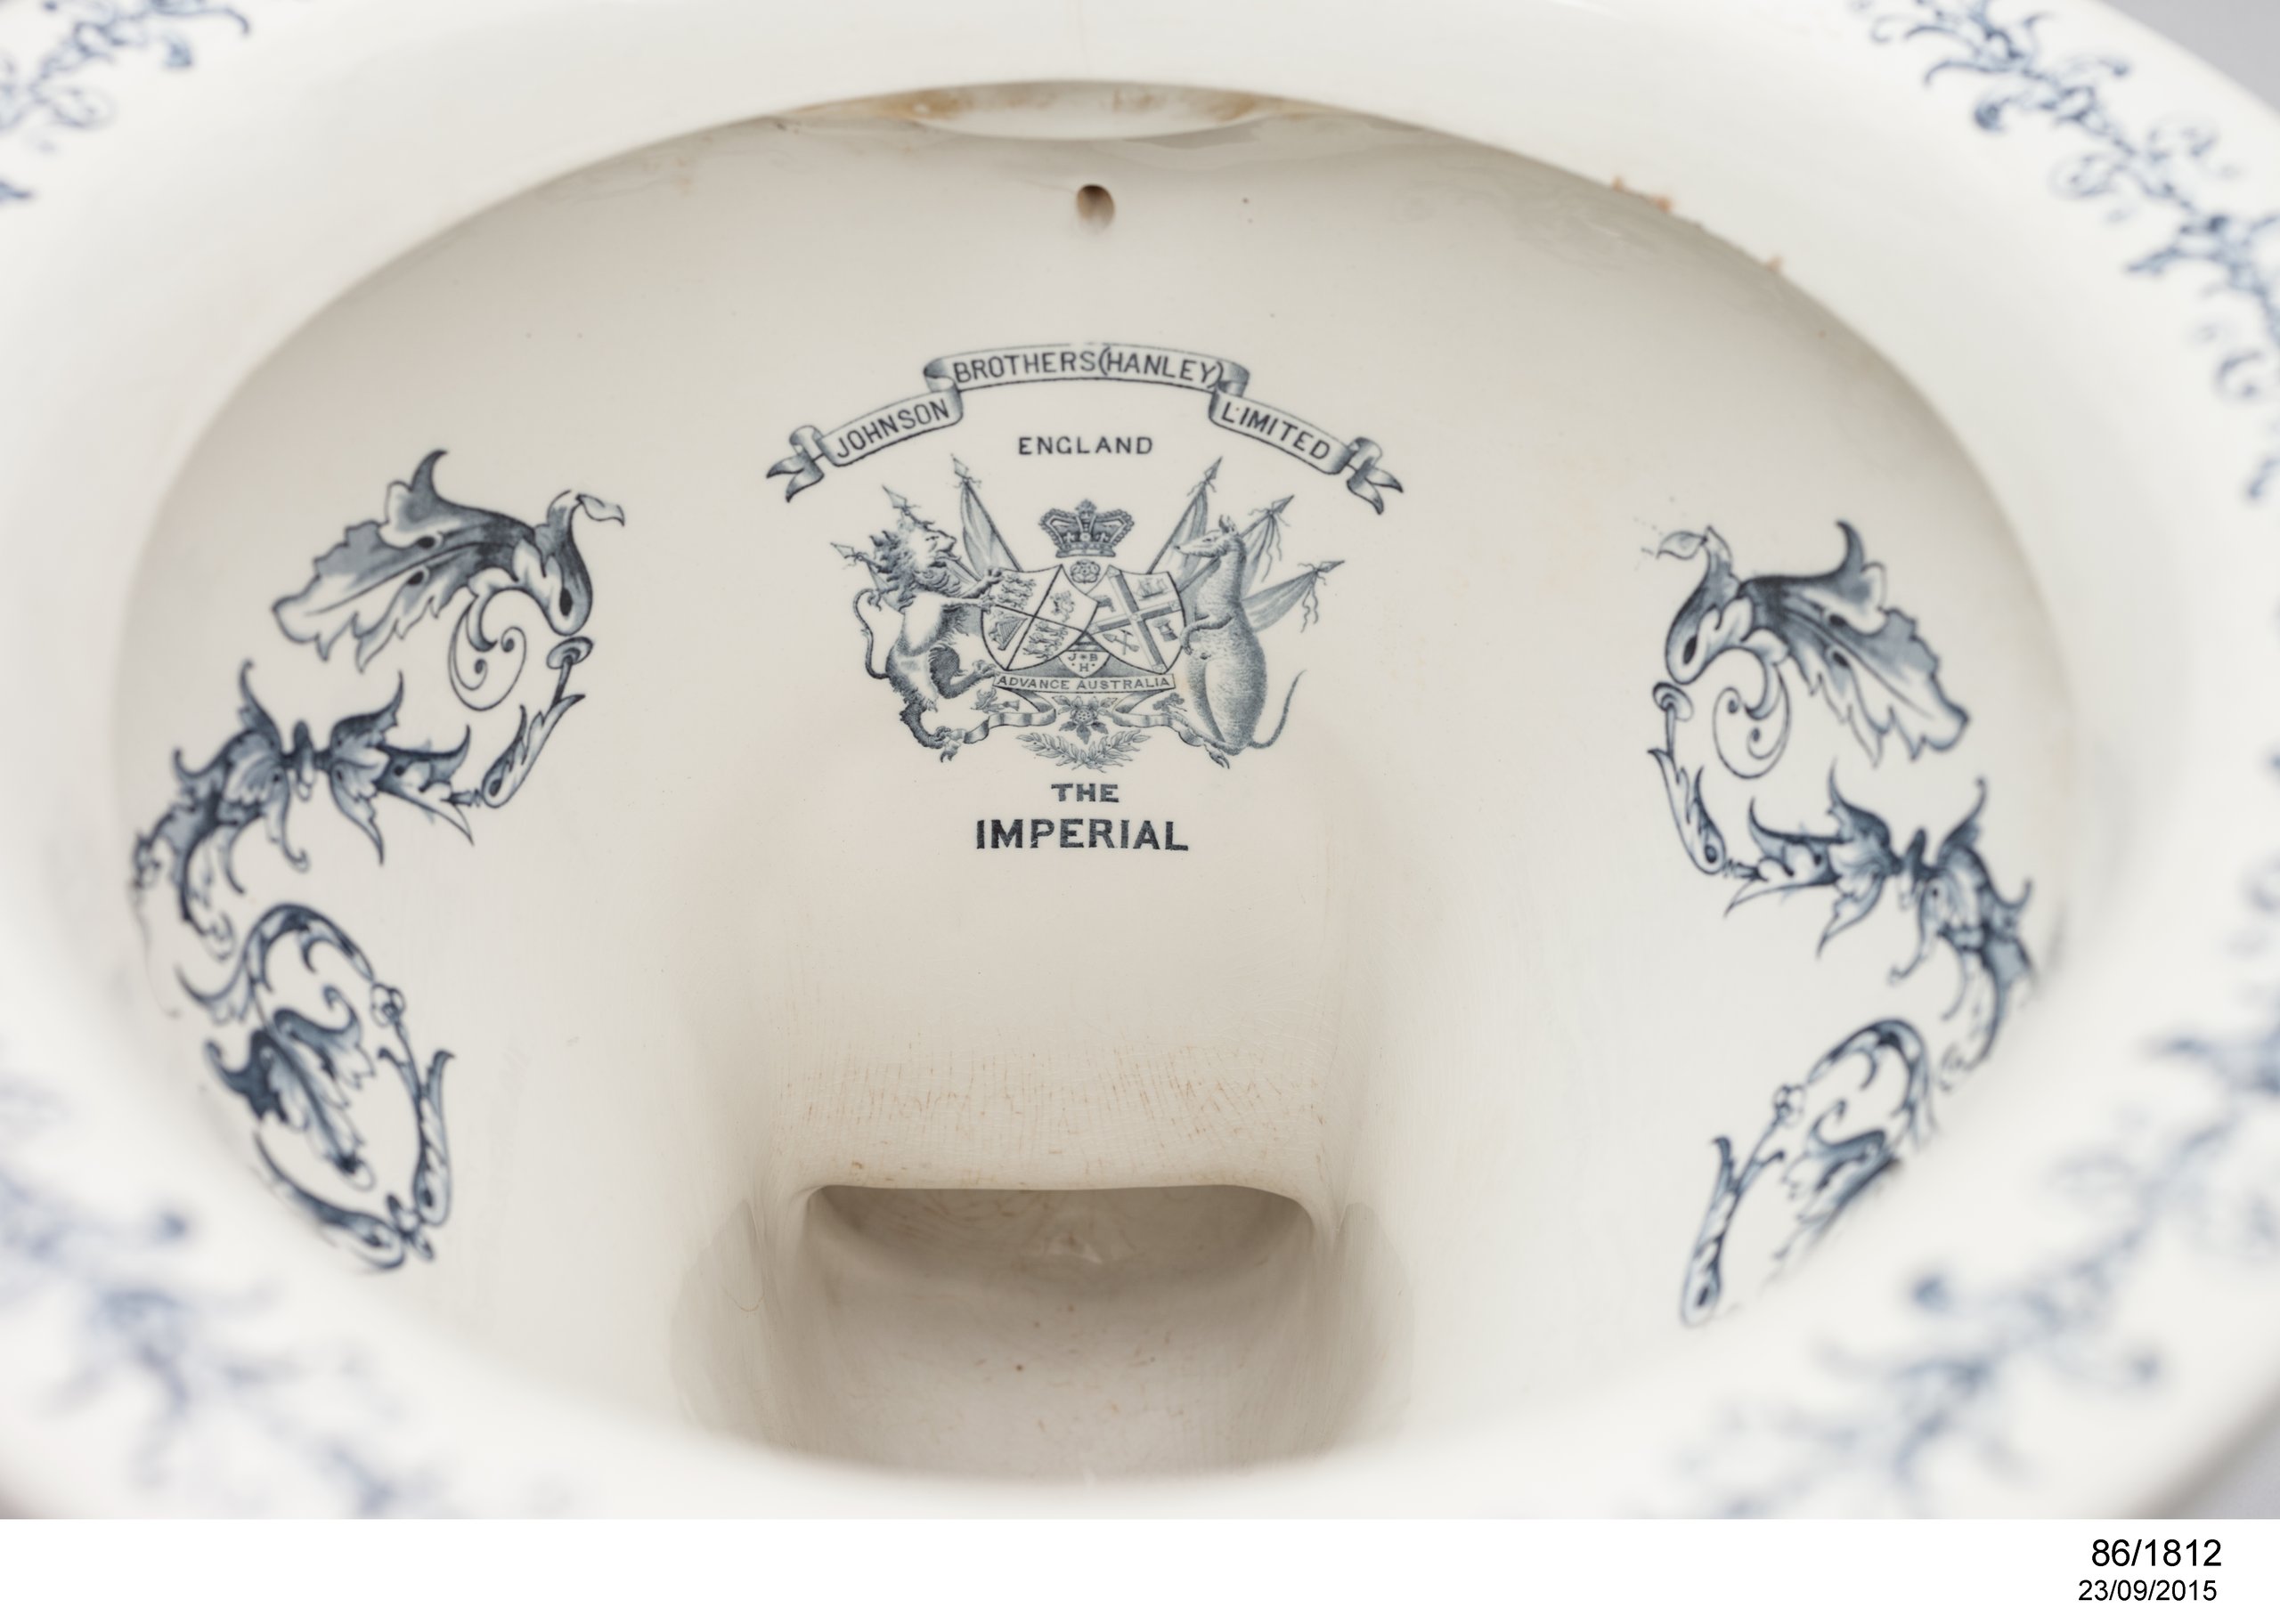 Porcelain toilet by Johnson Bros